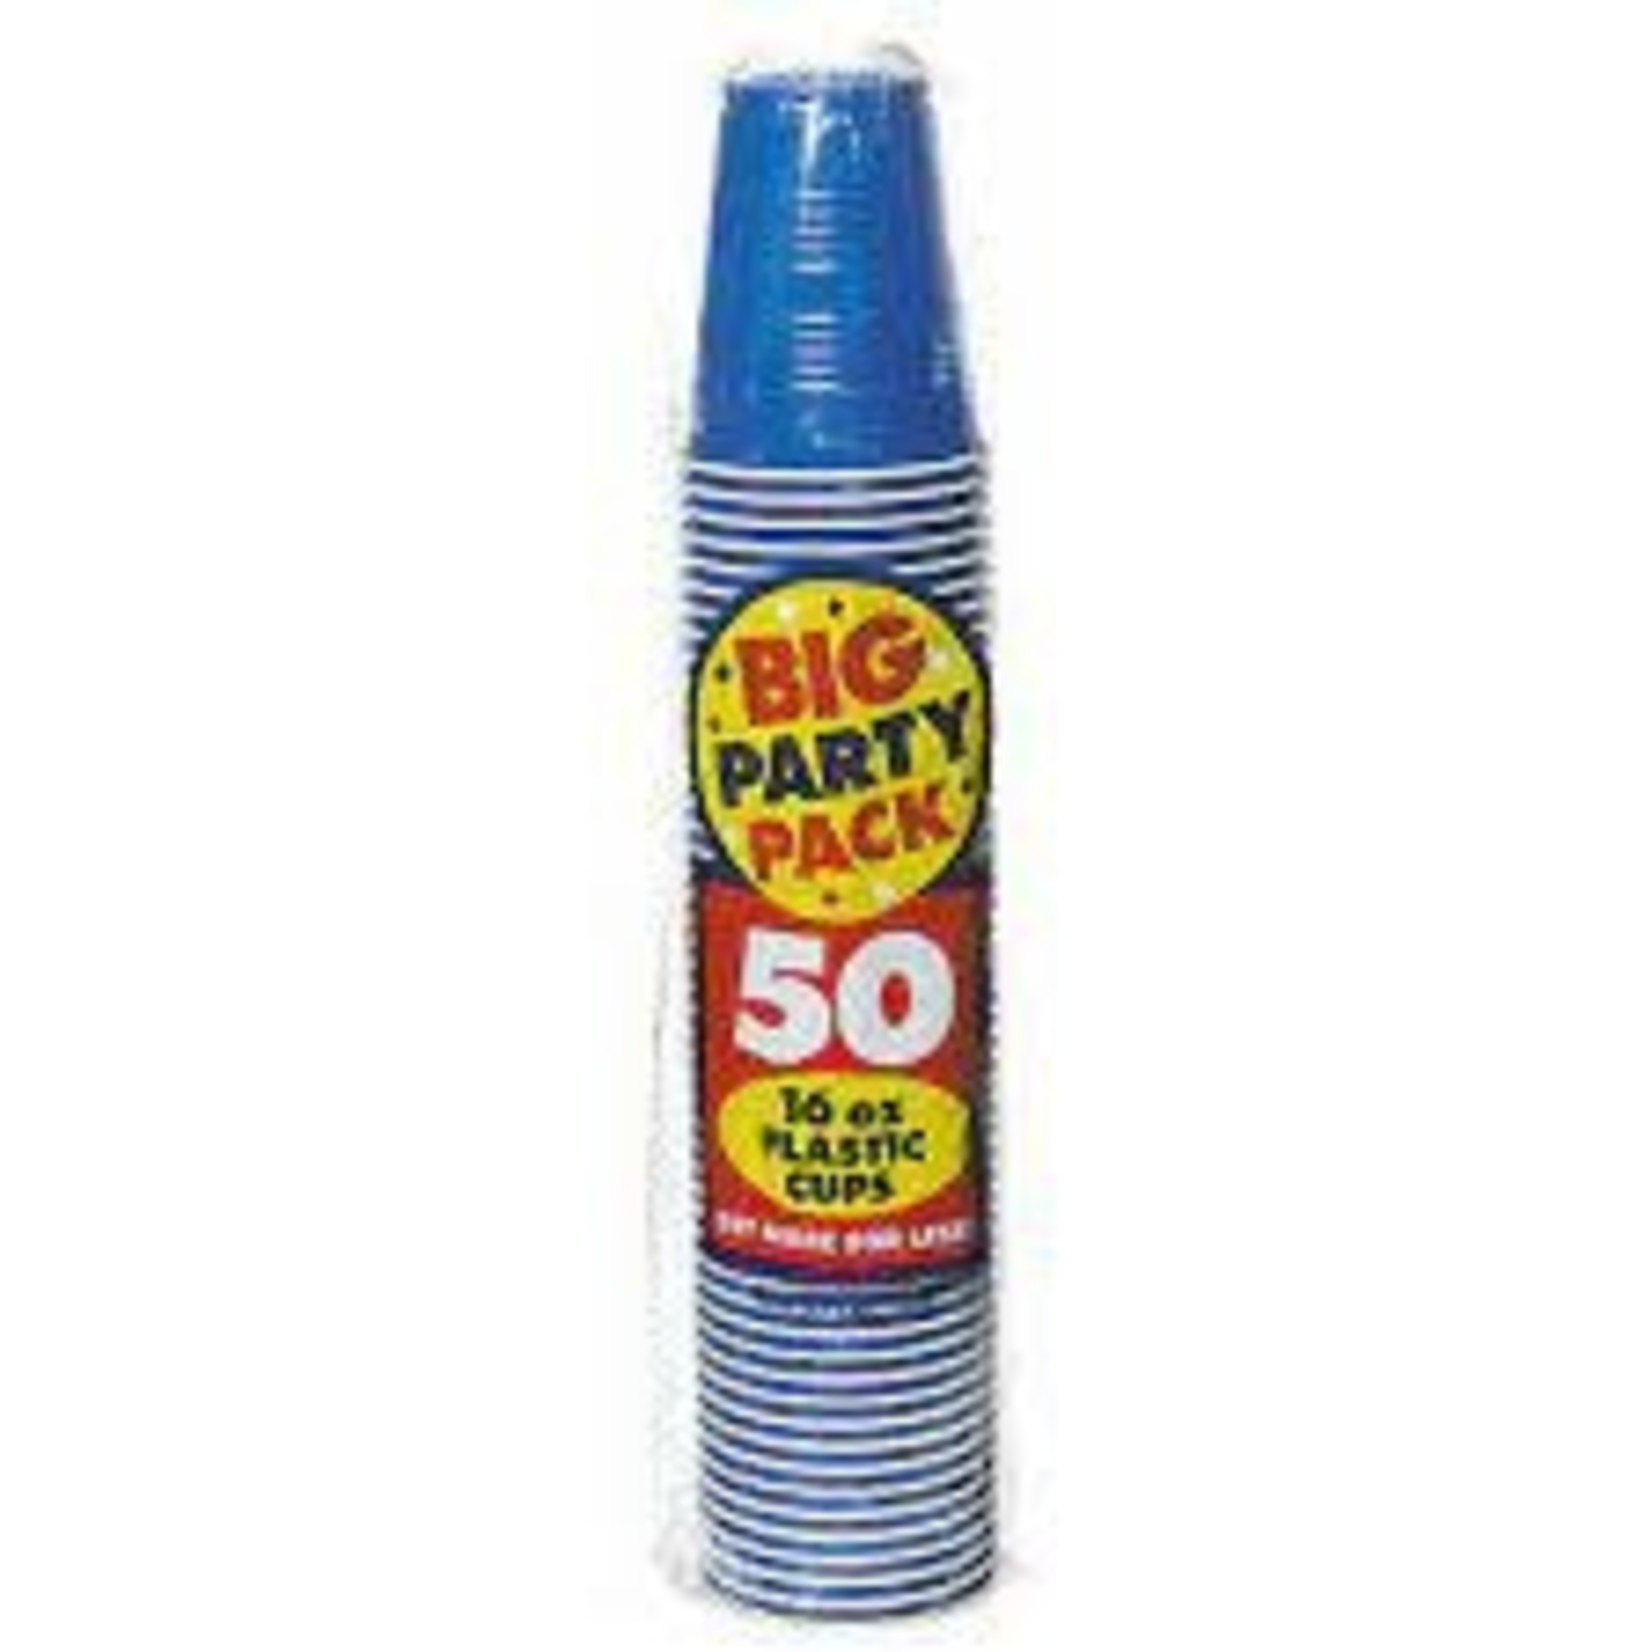 Big Party Plastic Cups 50ct